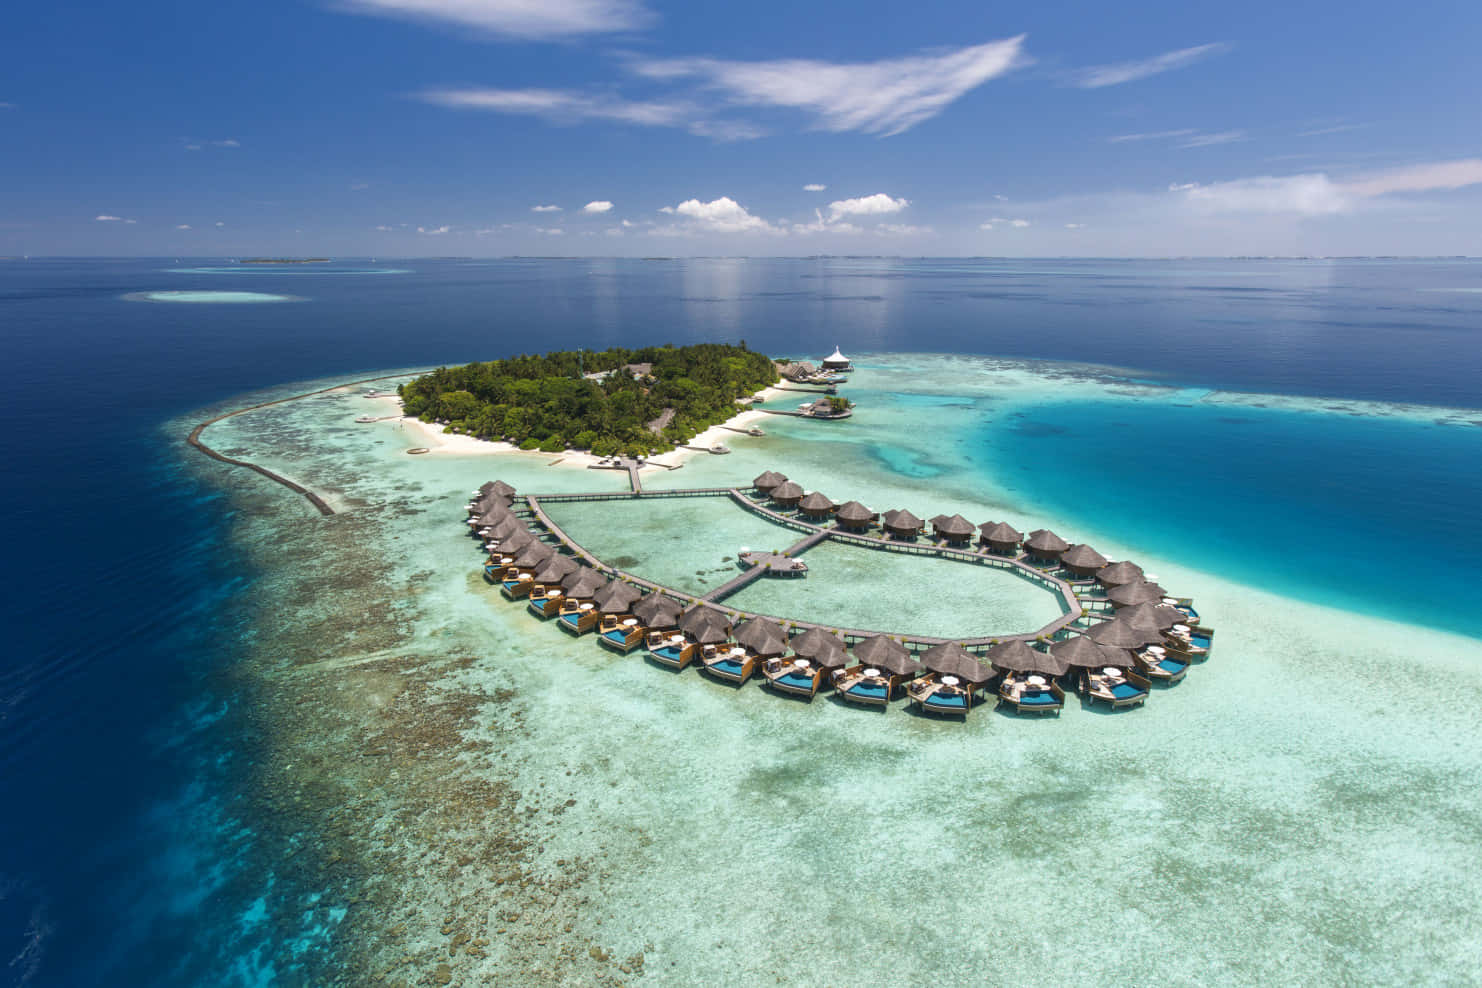 Enjoy the landscapes and aquatic animals of the Maldives